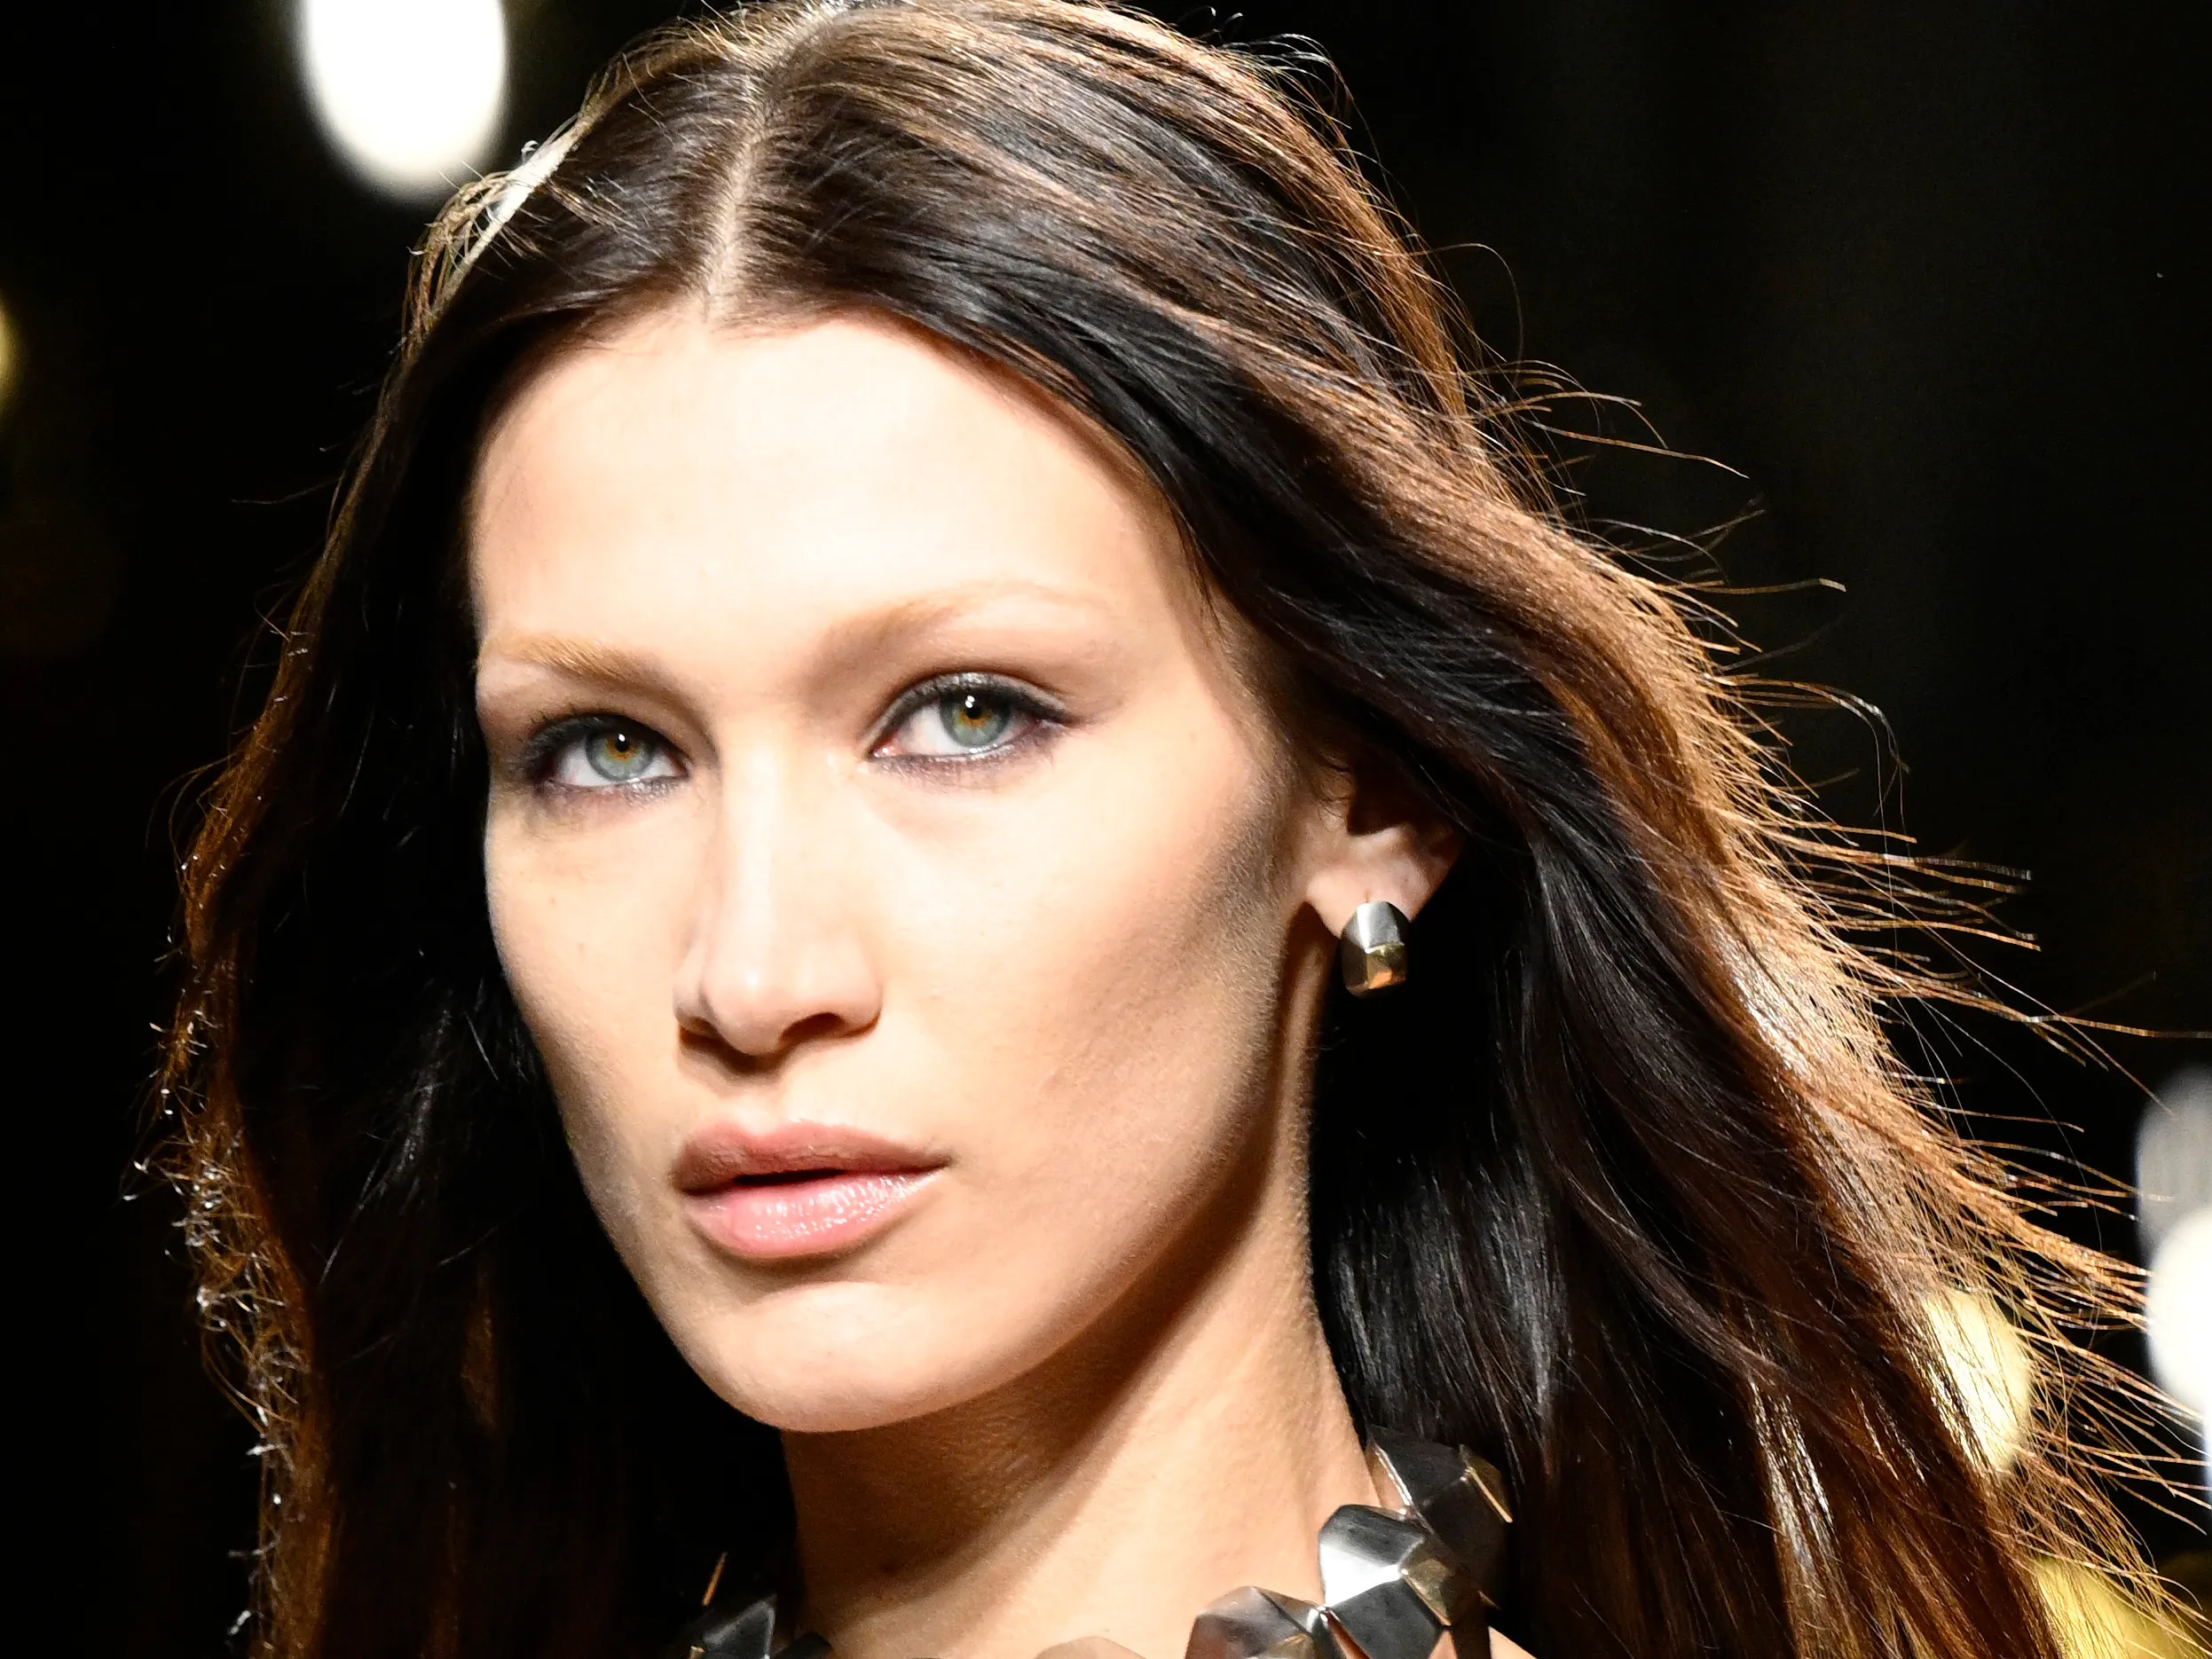 Arab models Gigi, Bella Hadid grace the runway for French label